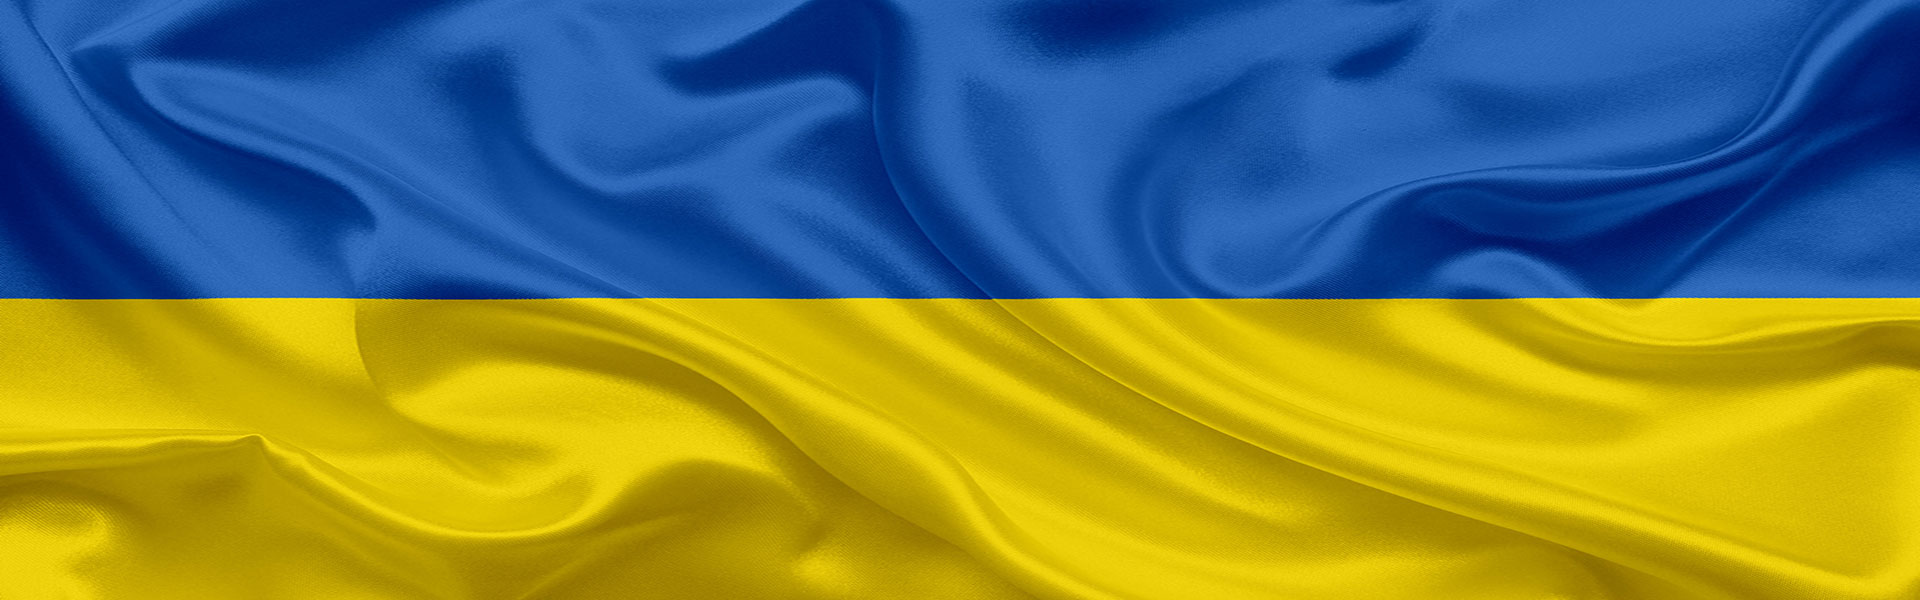 Help Ukraine - Khladoprom Ice Cream Factory